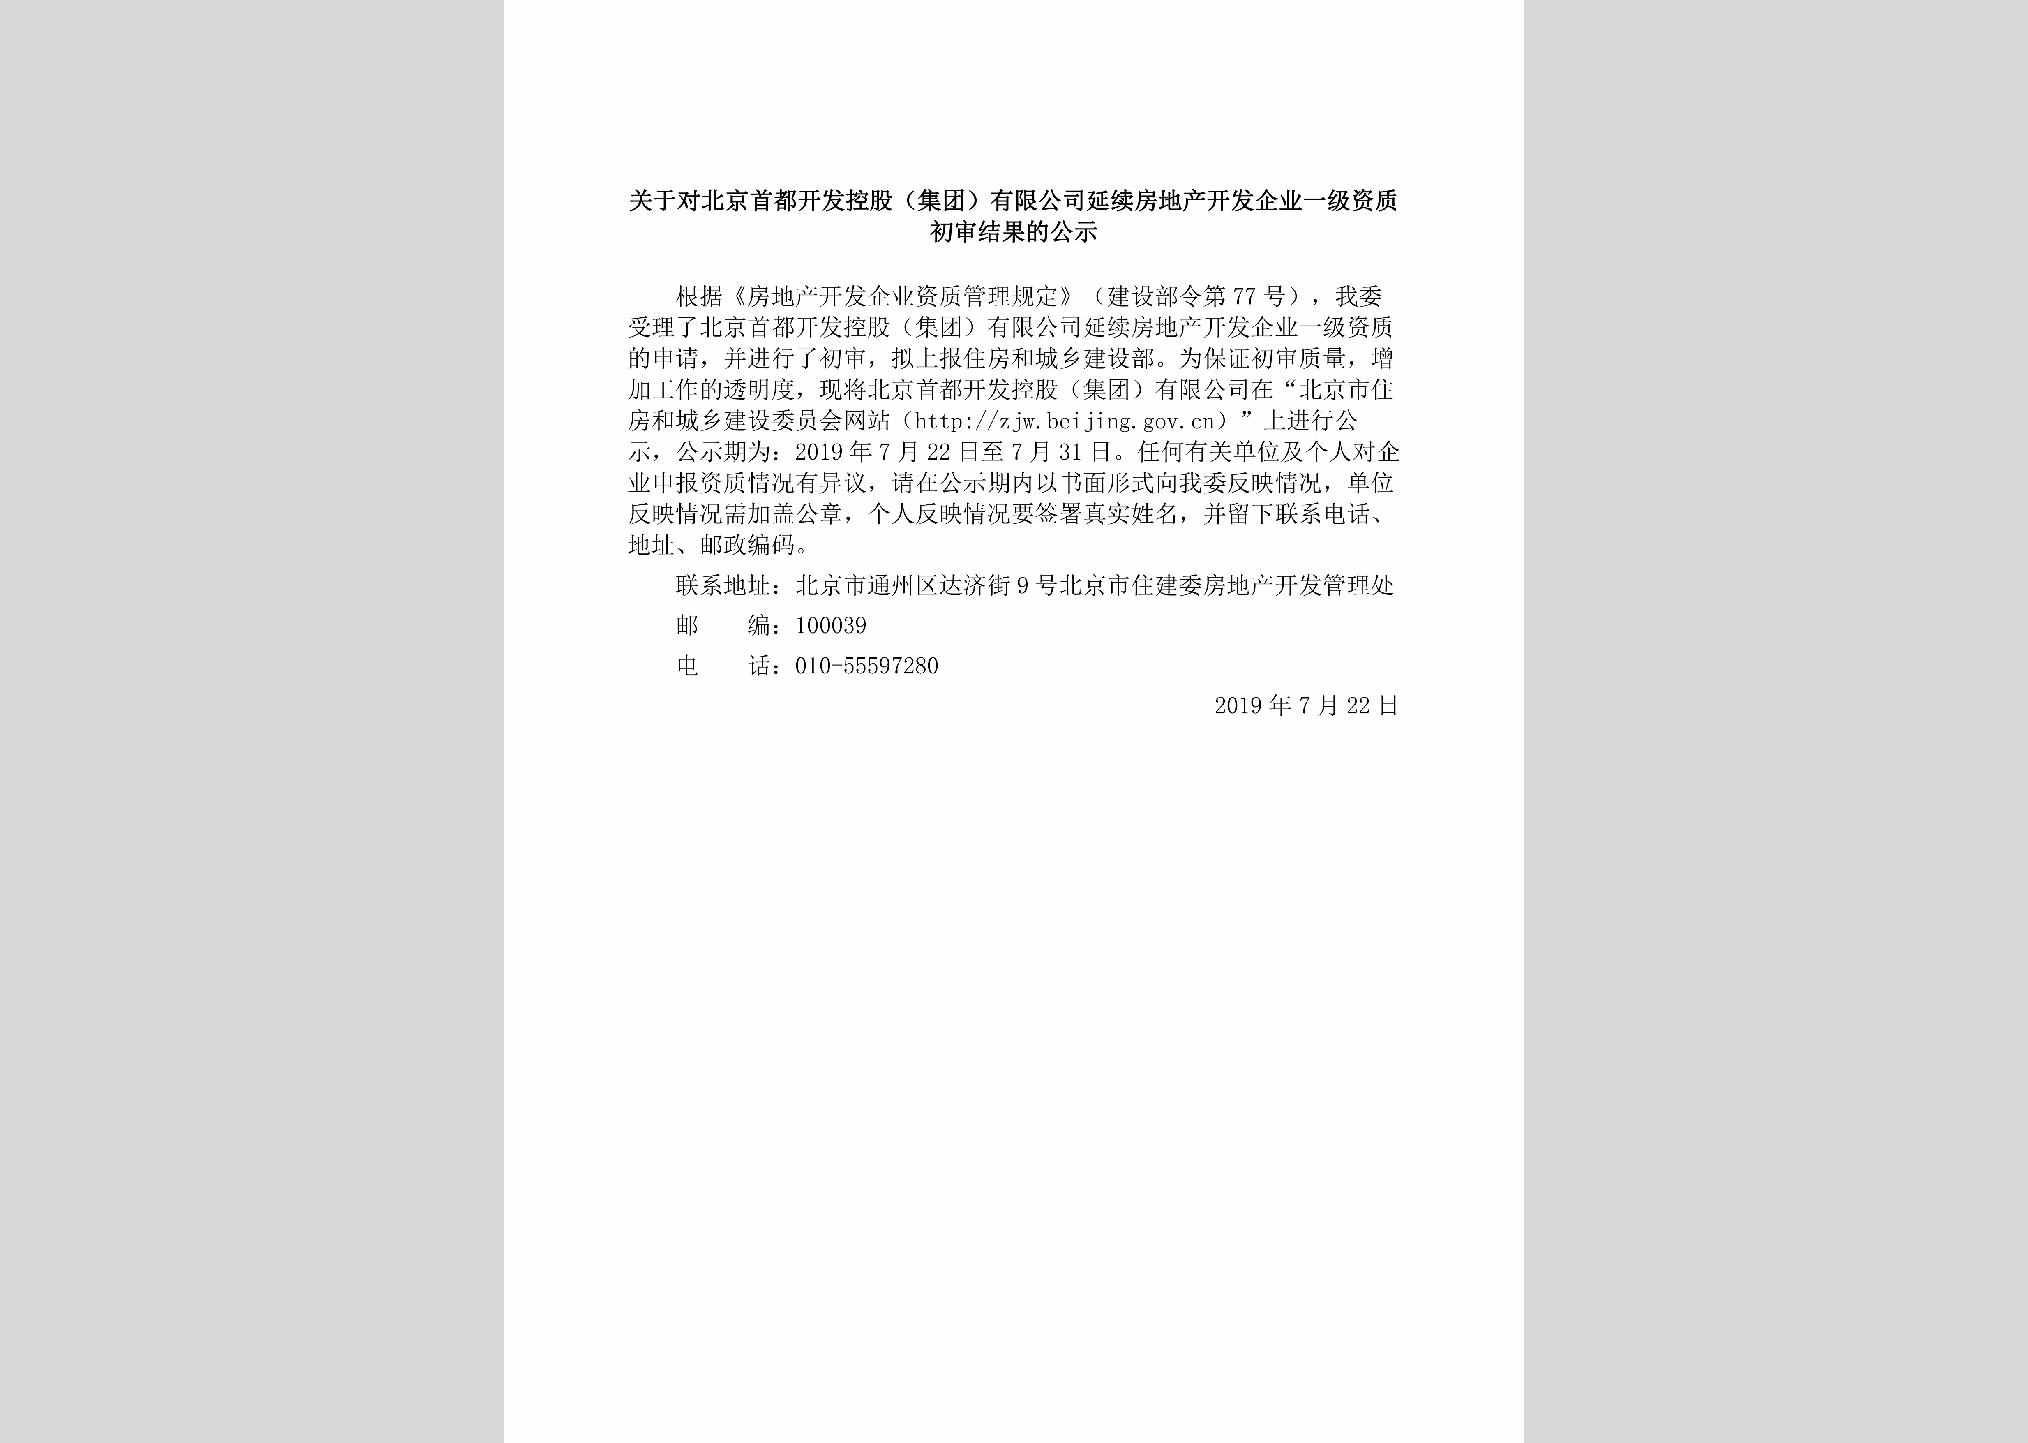 BJ-BJSDKFKG-2019：关于对北京首都开发控股（集团）有限公司延续房地产开发企业一级资质初审结果的公示